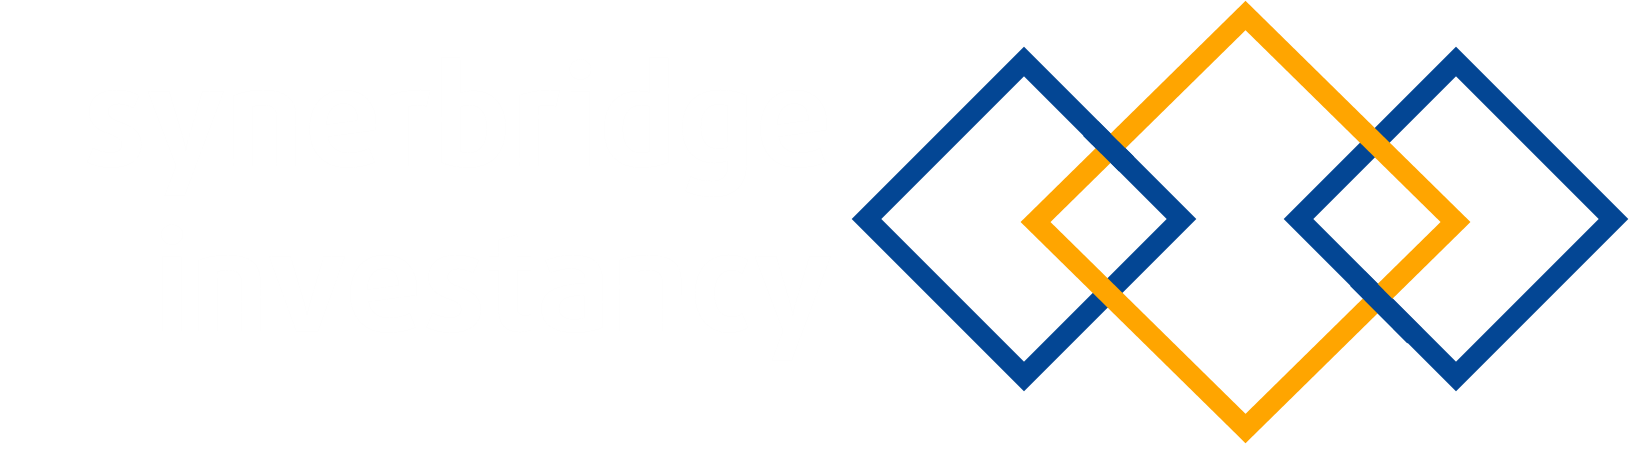 Synerbridge Investancy